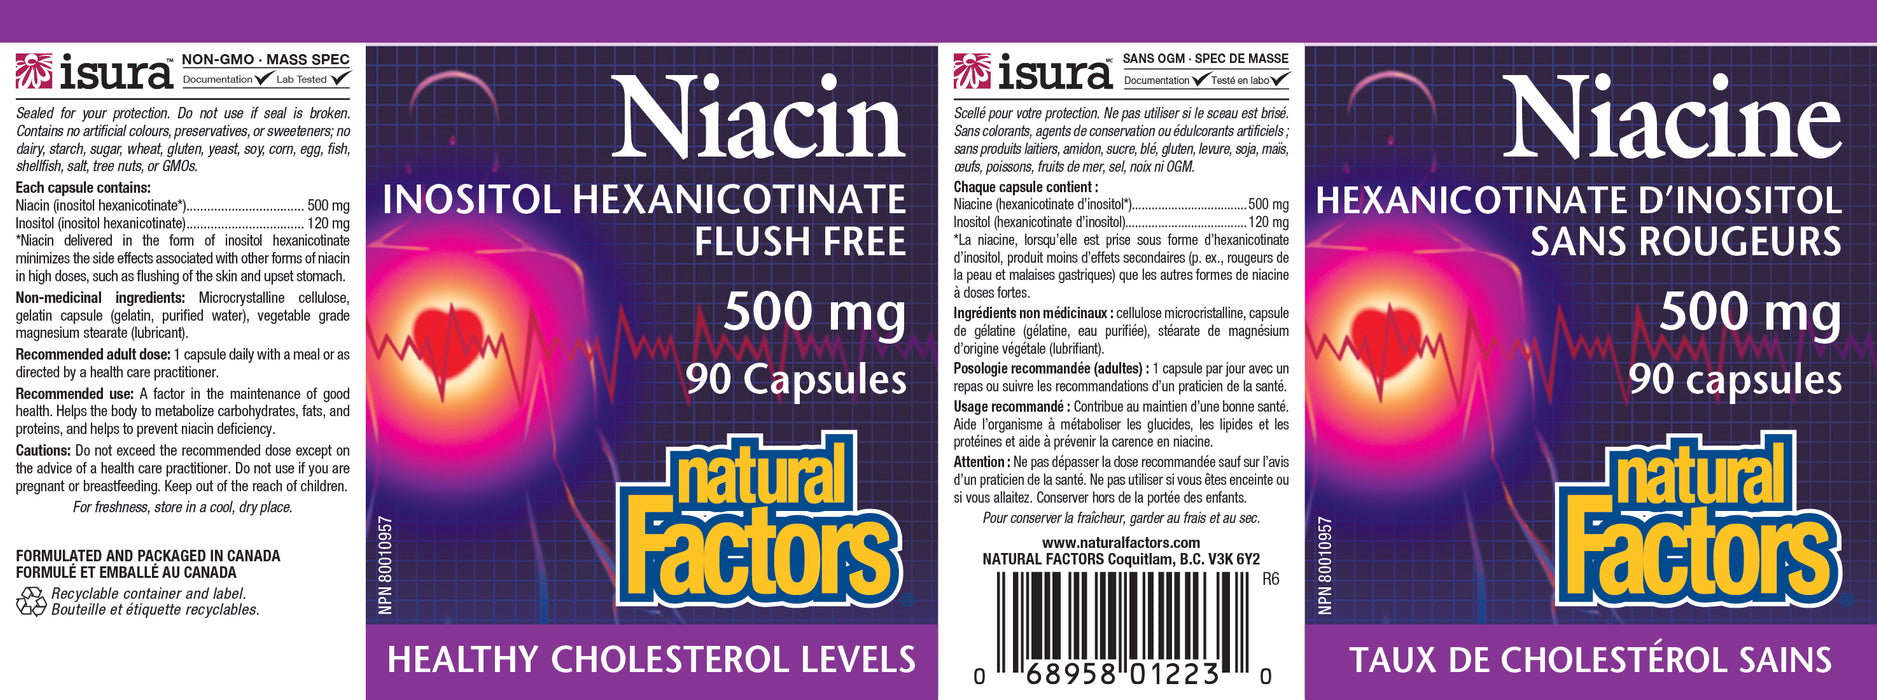 Natural Factors Niacin Inositol Hexanicotinate - Flush Free 500mg 90 Gelatin Capsules